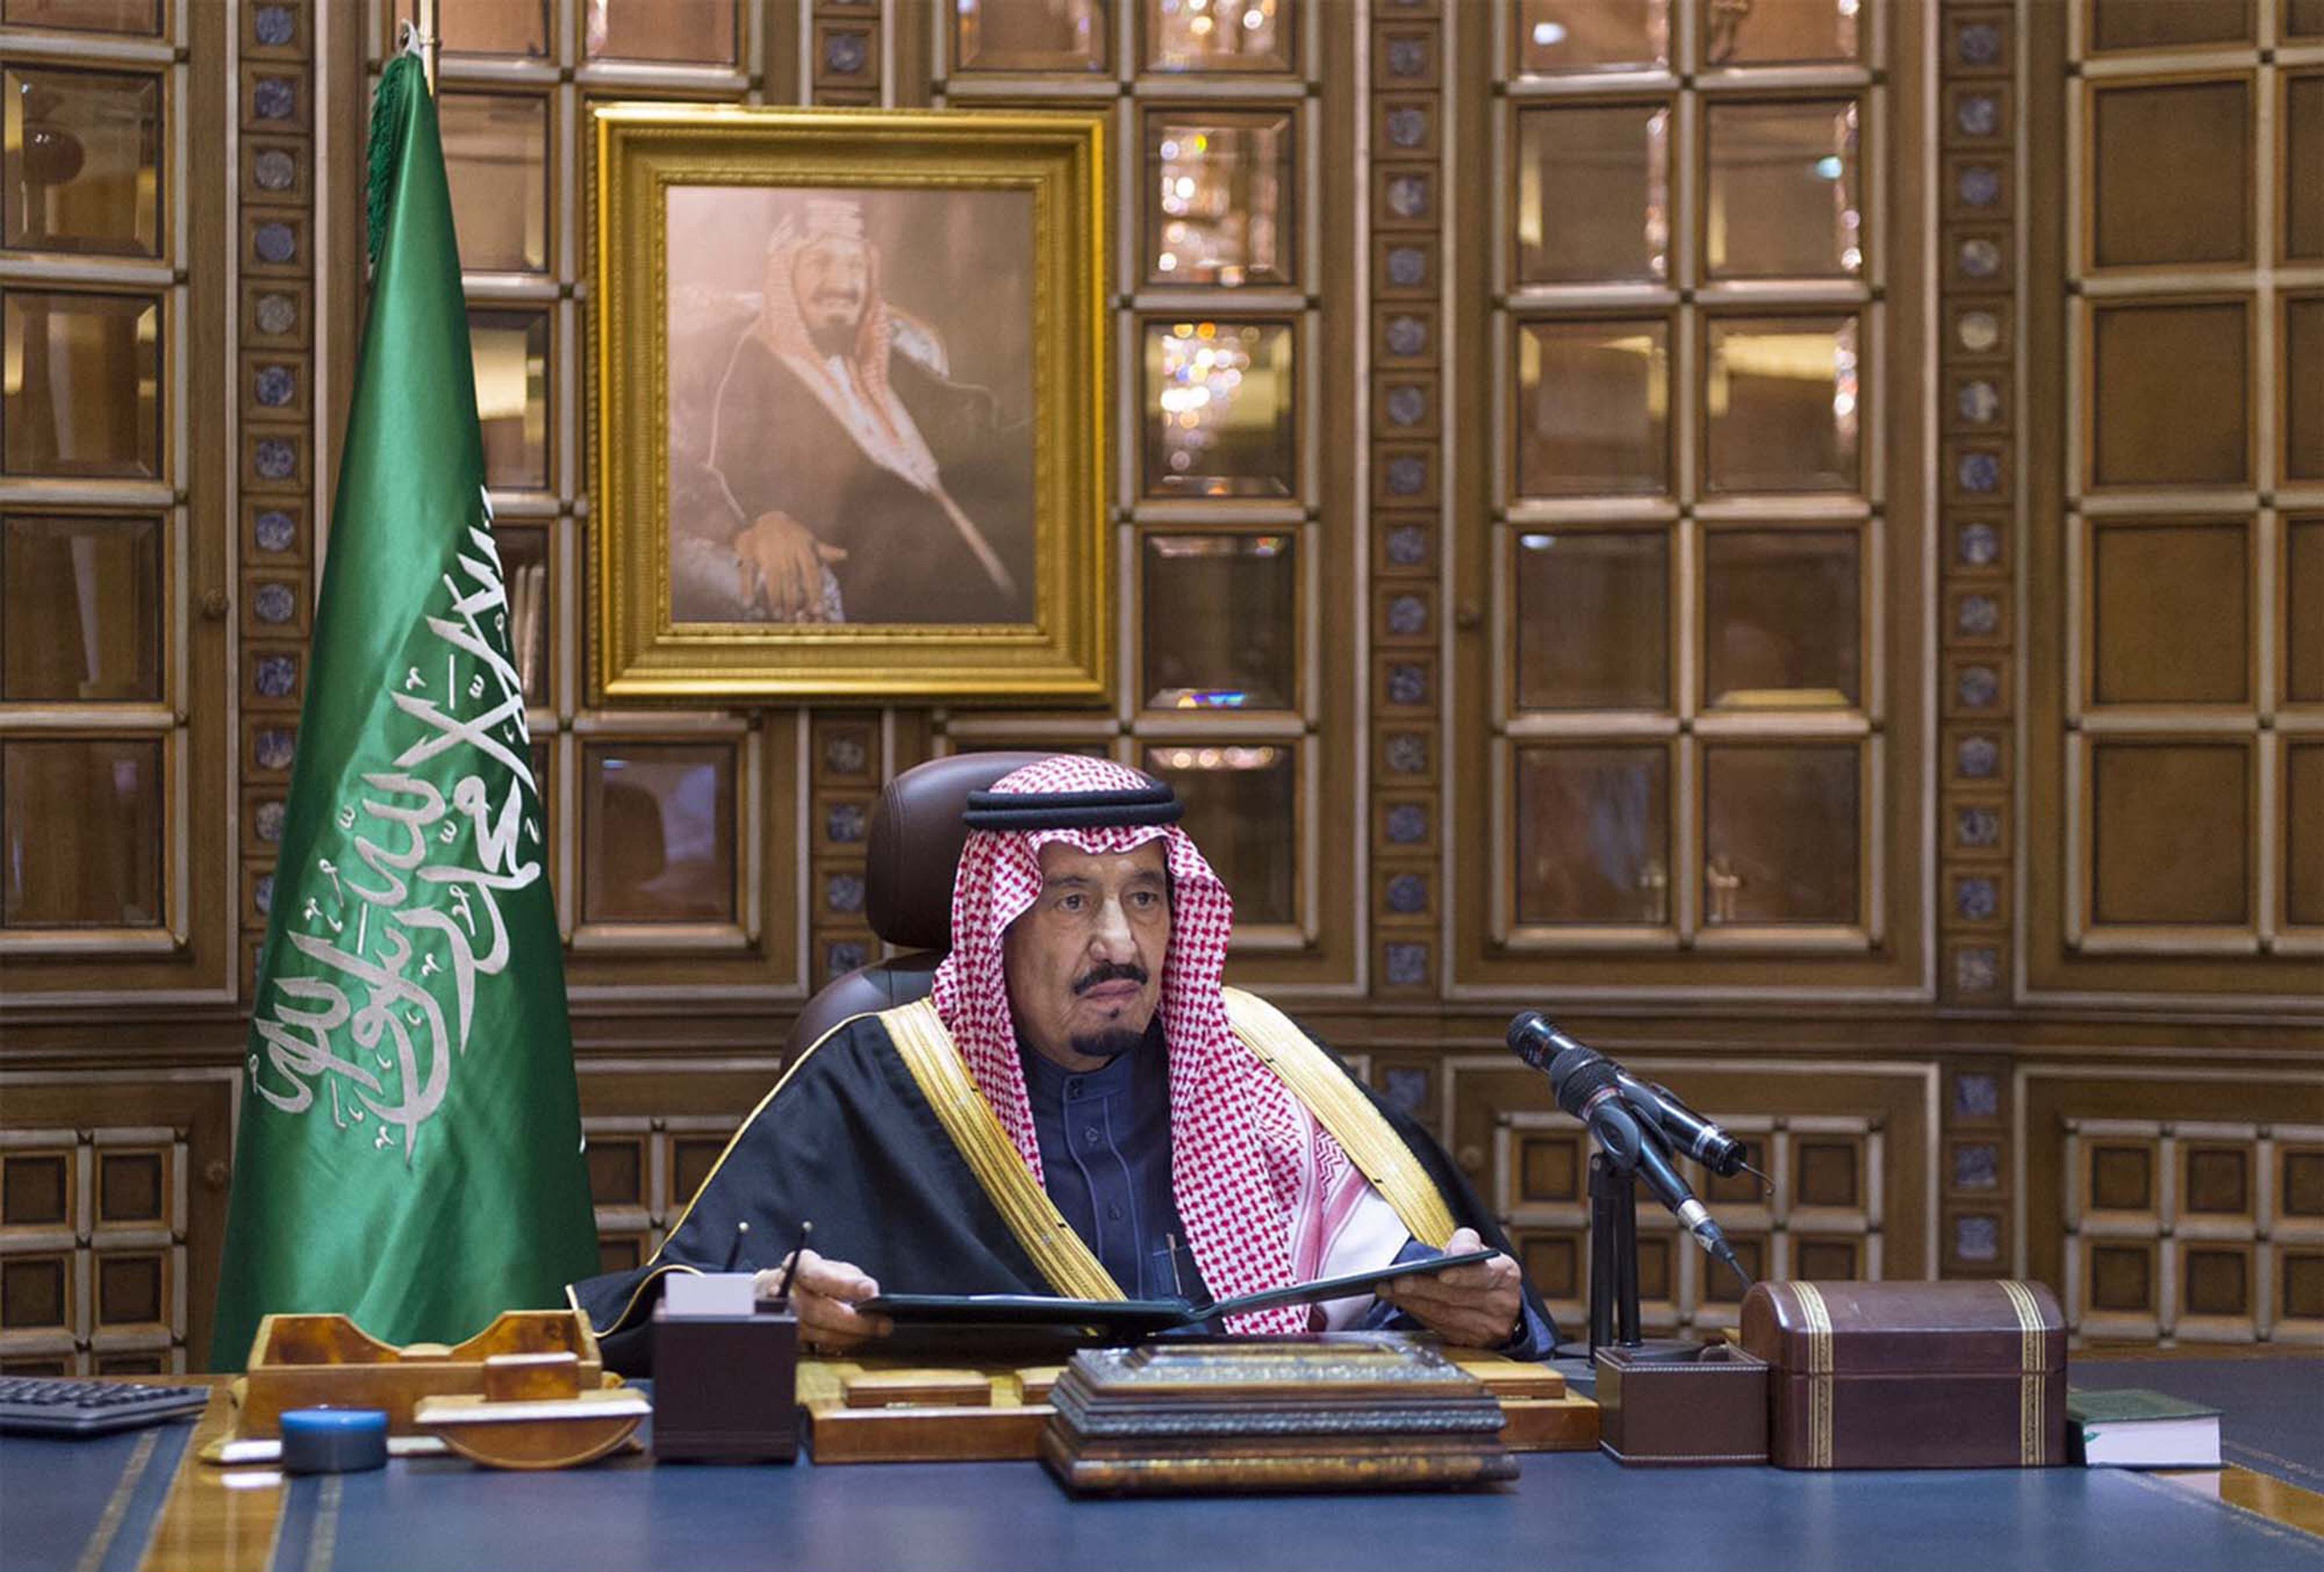 Абдалле аль сауду. Король Саудовской Аравии Салман. Сауди Король Саудовской Аравии. Салман ибн Абдель Азиз Аль Сауд. Король Саудовской Аравии Салману Бен Абдель Азизу Аль Сауду.